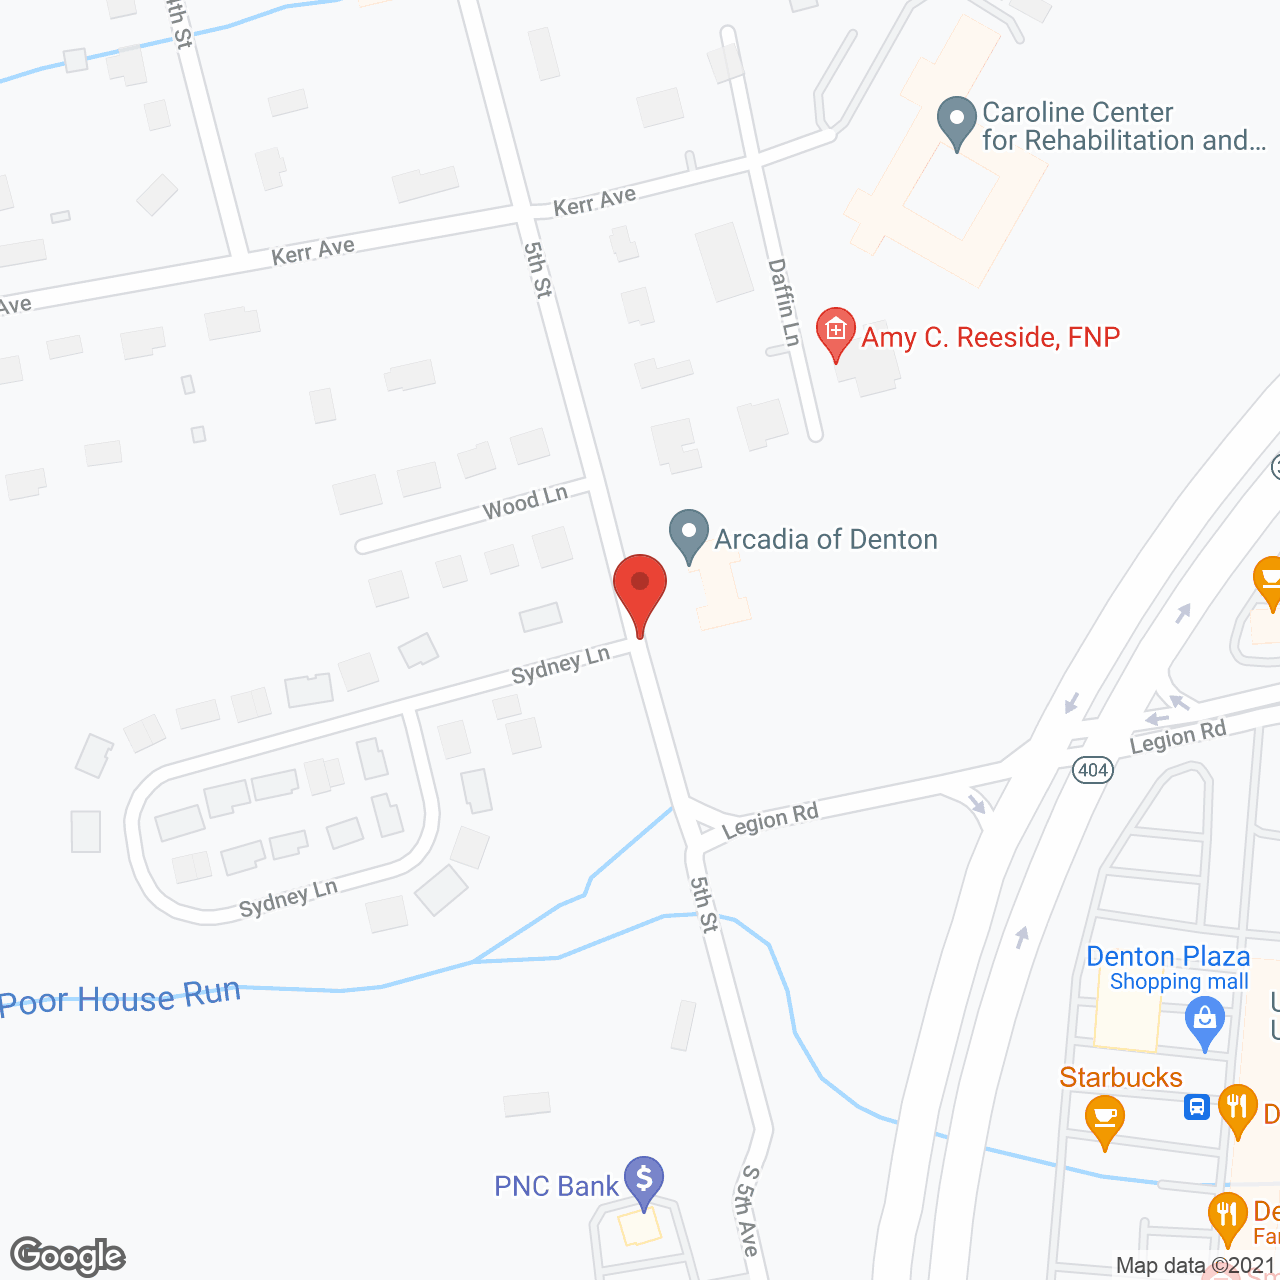 Arcadia of Denton in google map